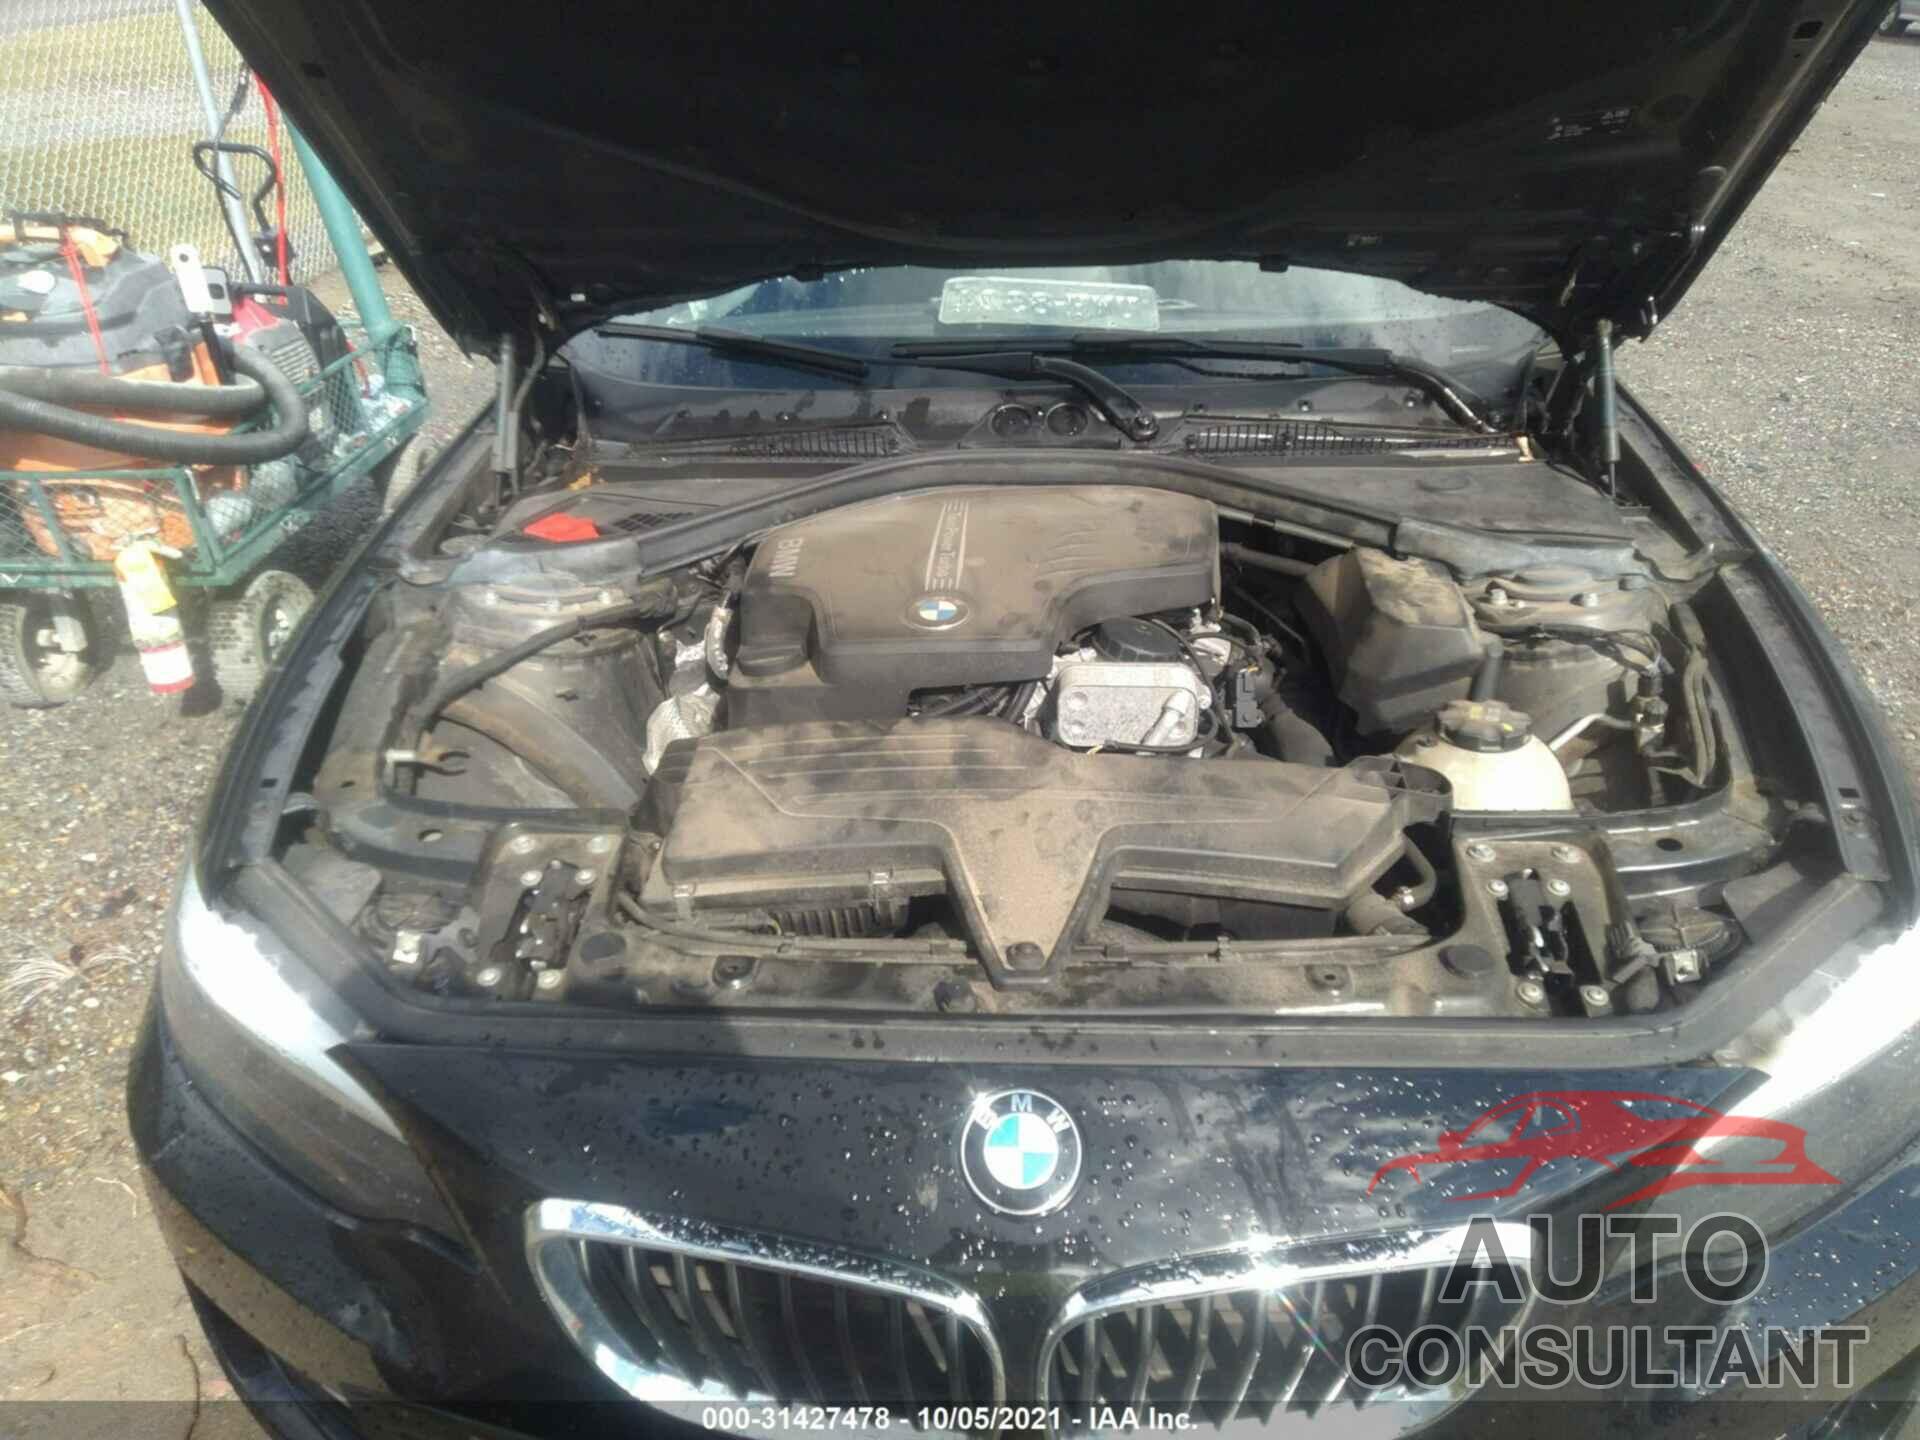 BMW 2 SERIES 2016 - WBA1F9C51GV546721